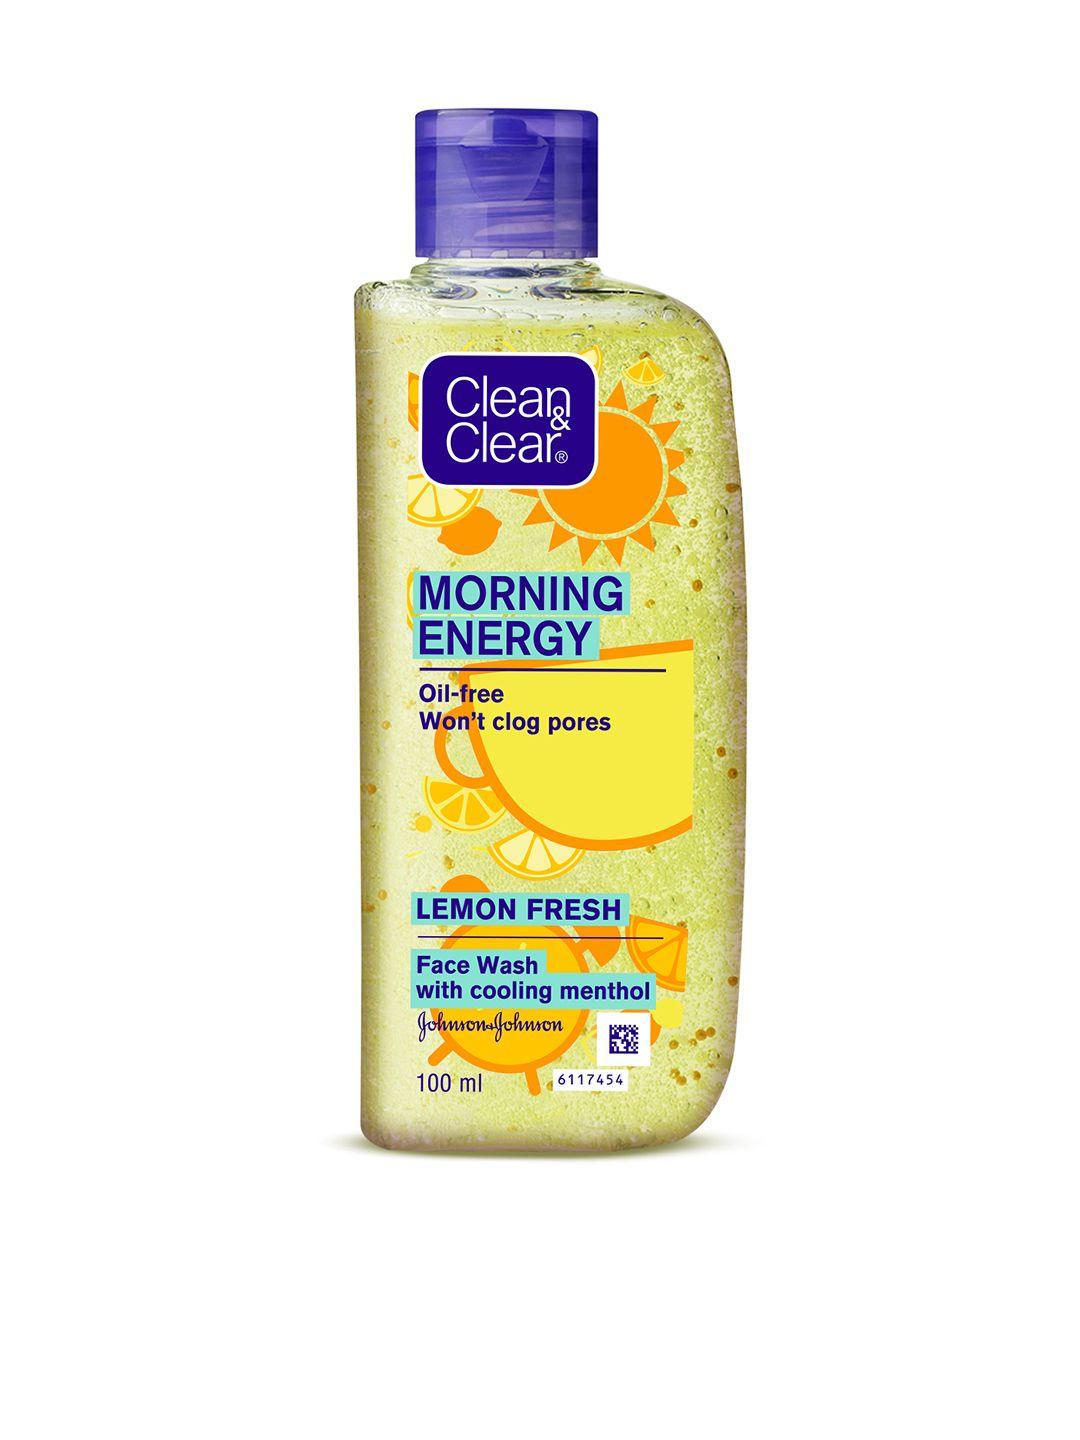 clean&clear morning energy oil free lemon fresh face wash - 100 ml